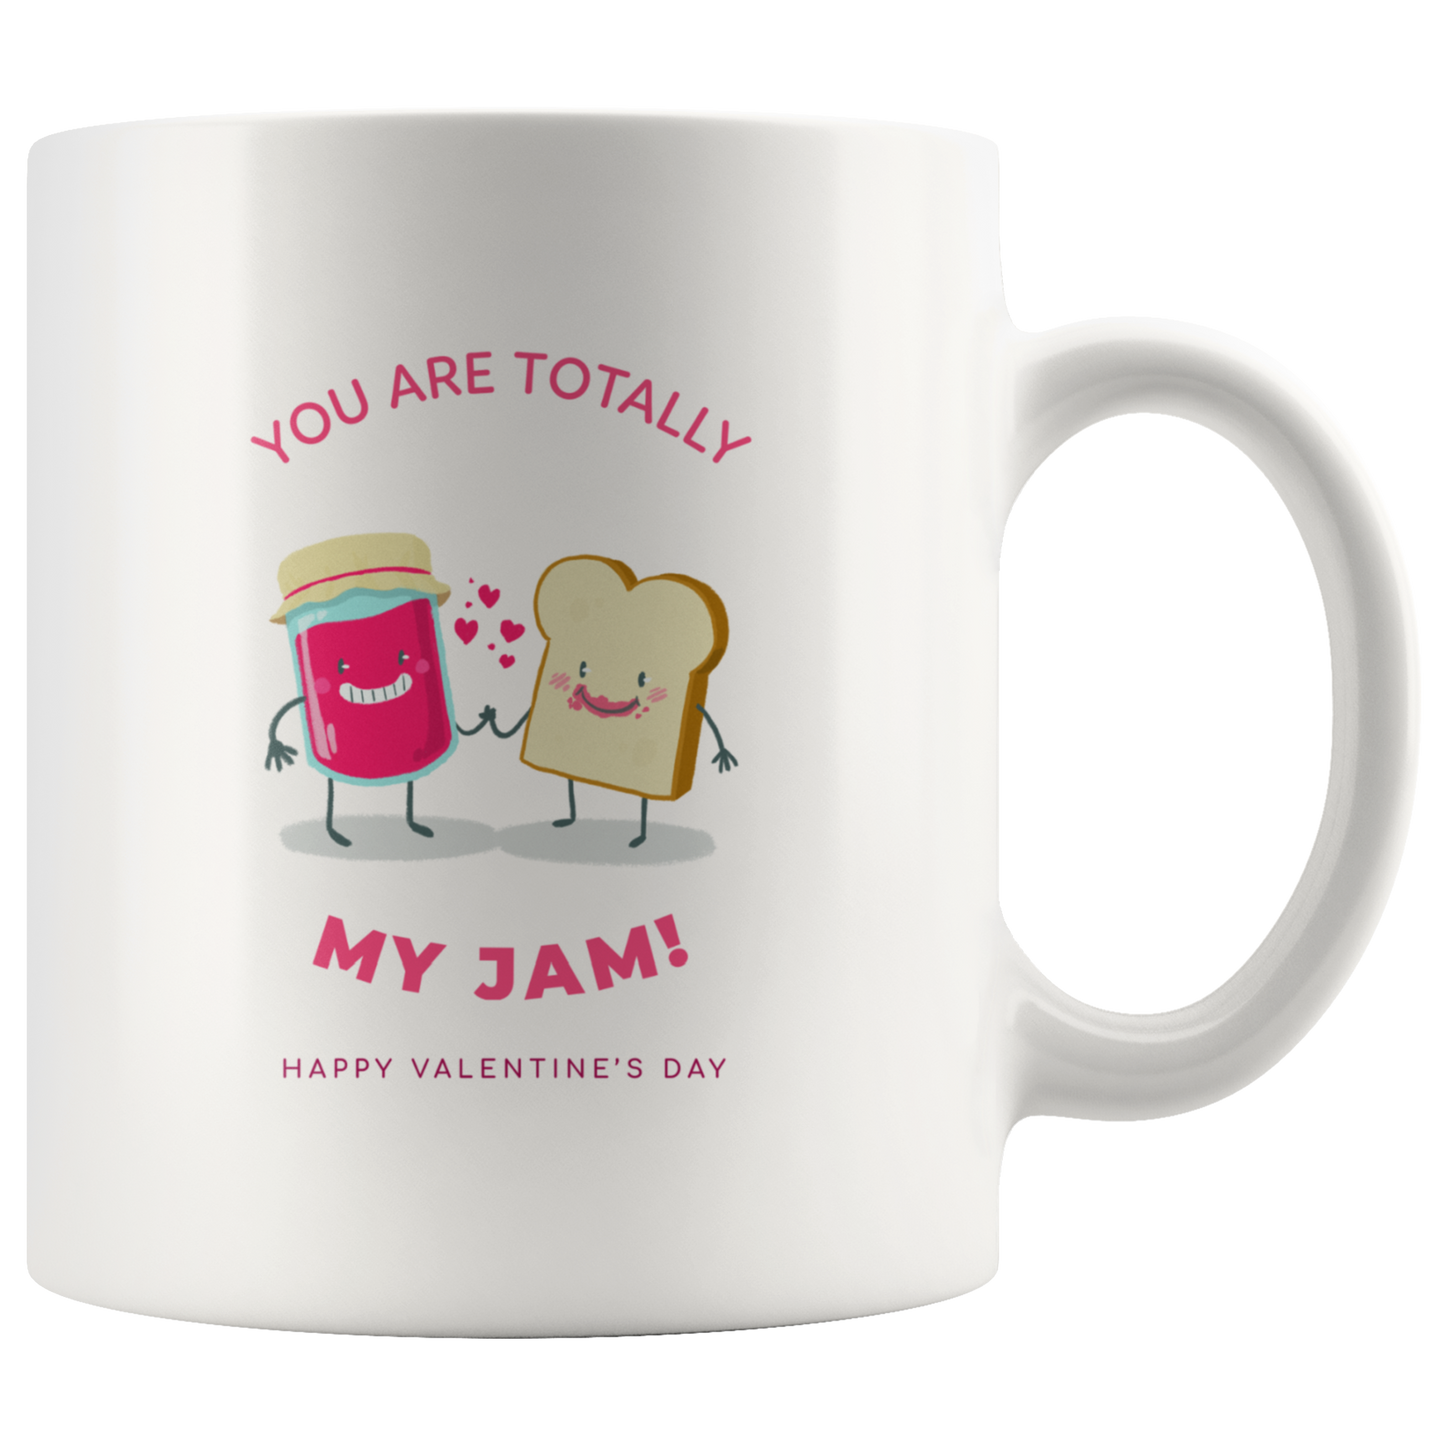 Funny Valentine Mug, Funny Coffee Mug, Couples Gift, Valentine Mug Gift, Cute Mugs